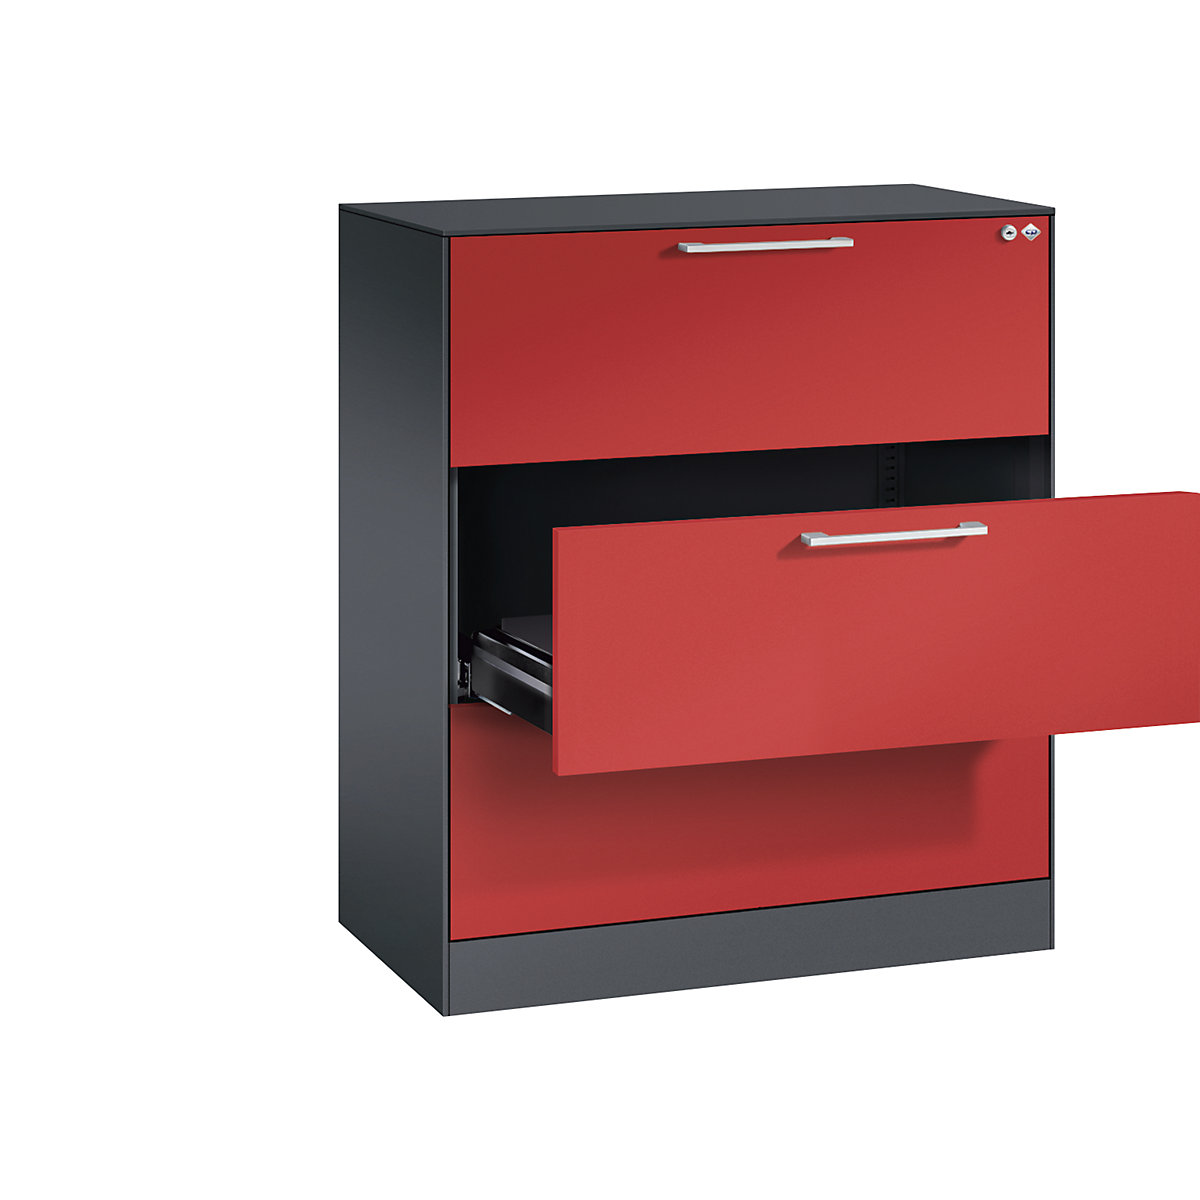 C+P – Kartotéková skříň ASISTO, výška 992 mm, se 3 výsuvy, DIN A4 na šířku, černošedá/ohnivě červená